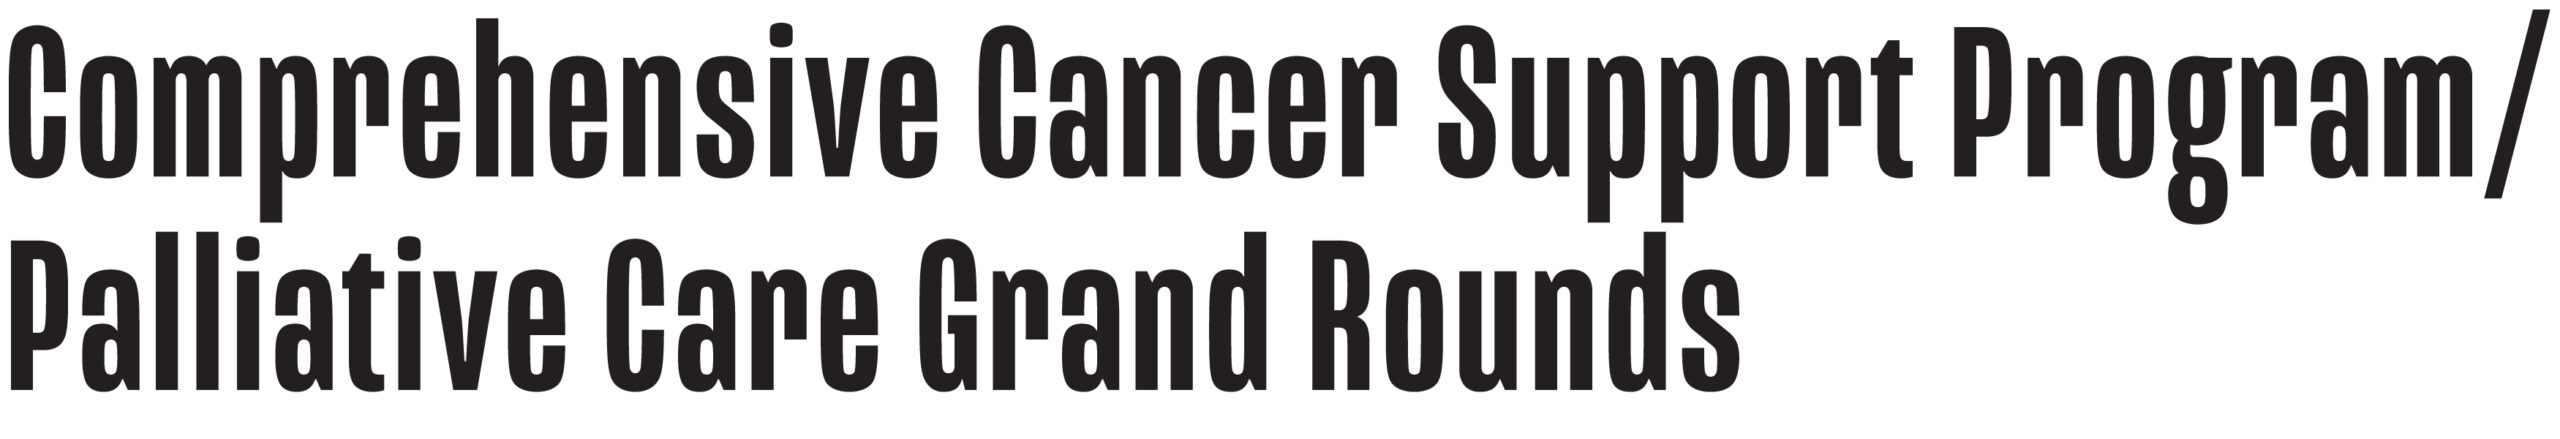 Comprehensive Cancer Support Program / Palliative Care Grand Rounds Logo